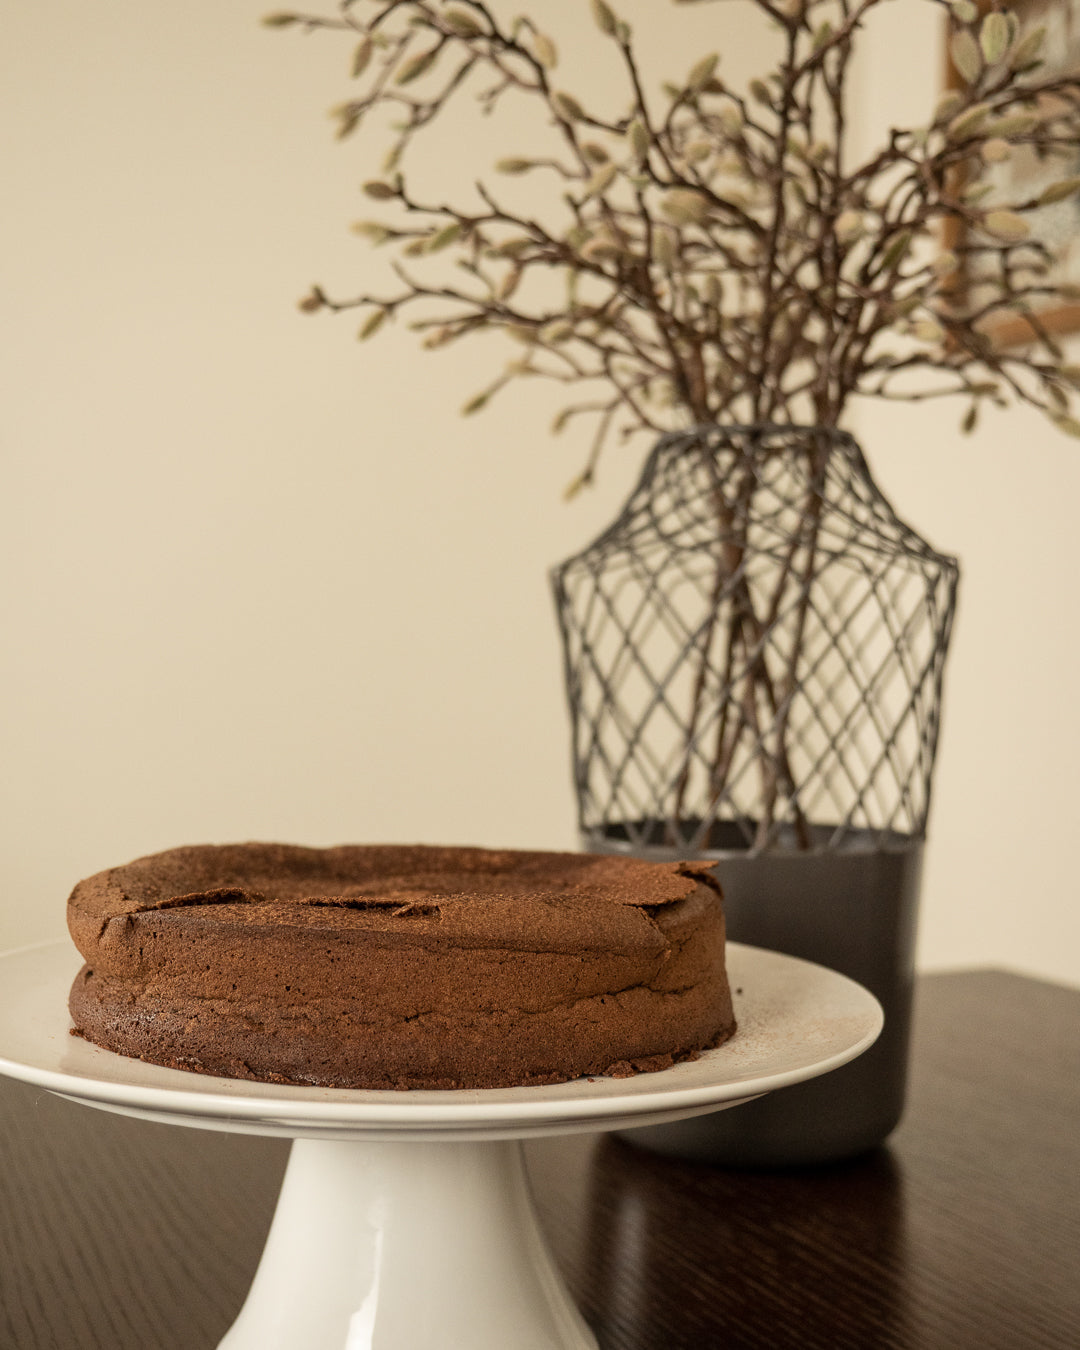 Flourless Chocolate Pecan Cake